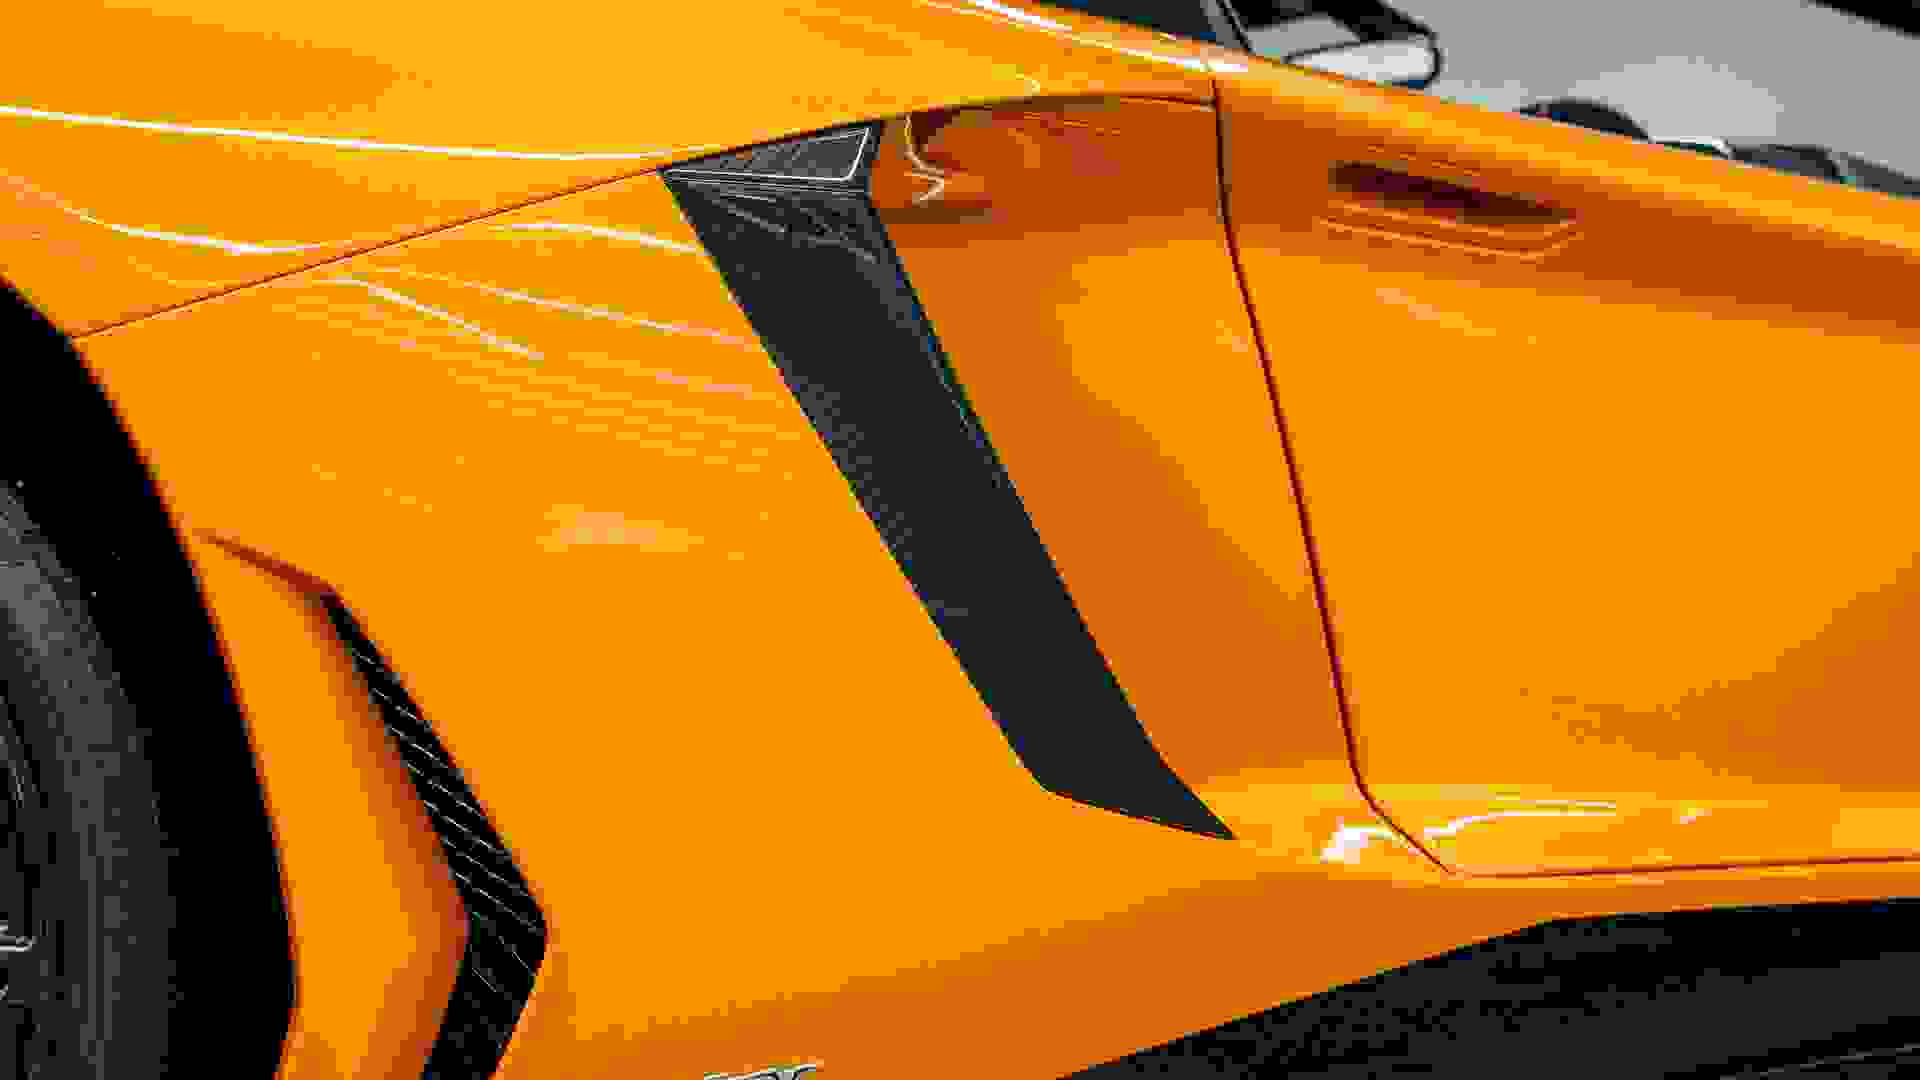 Lamborghini AVENTADOR SV Photo 96d990fd-3e68-4bca-8762-a816e900d0f0.jpg